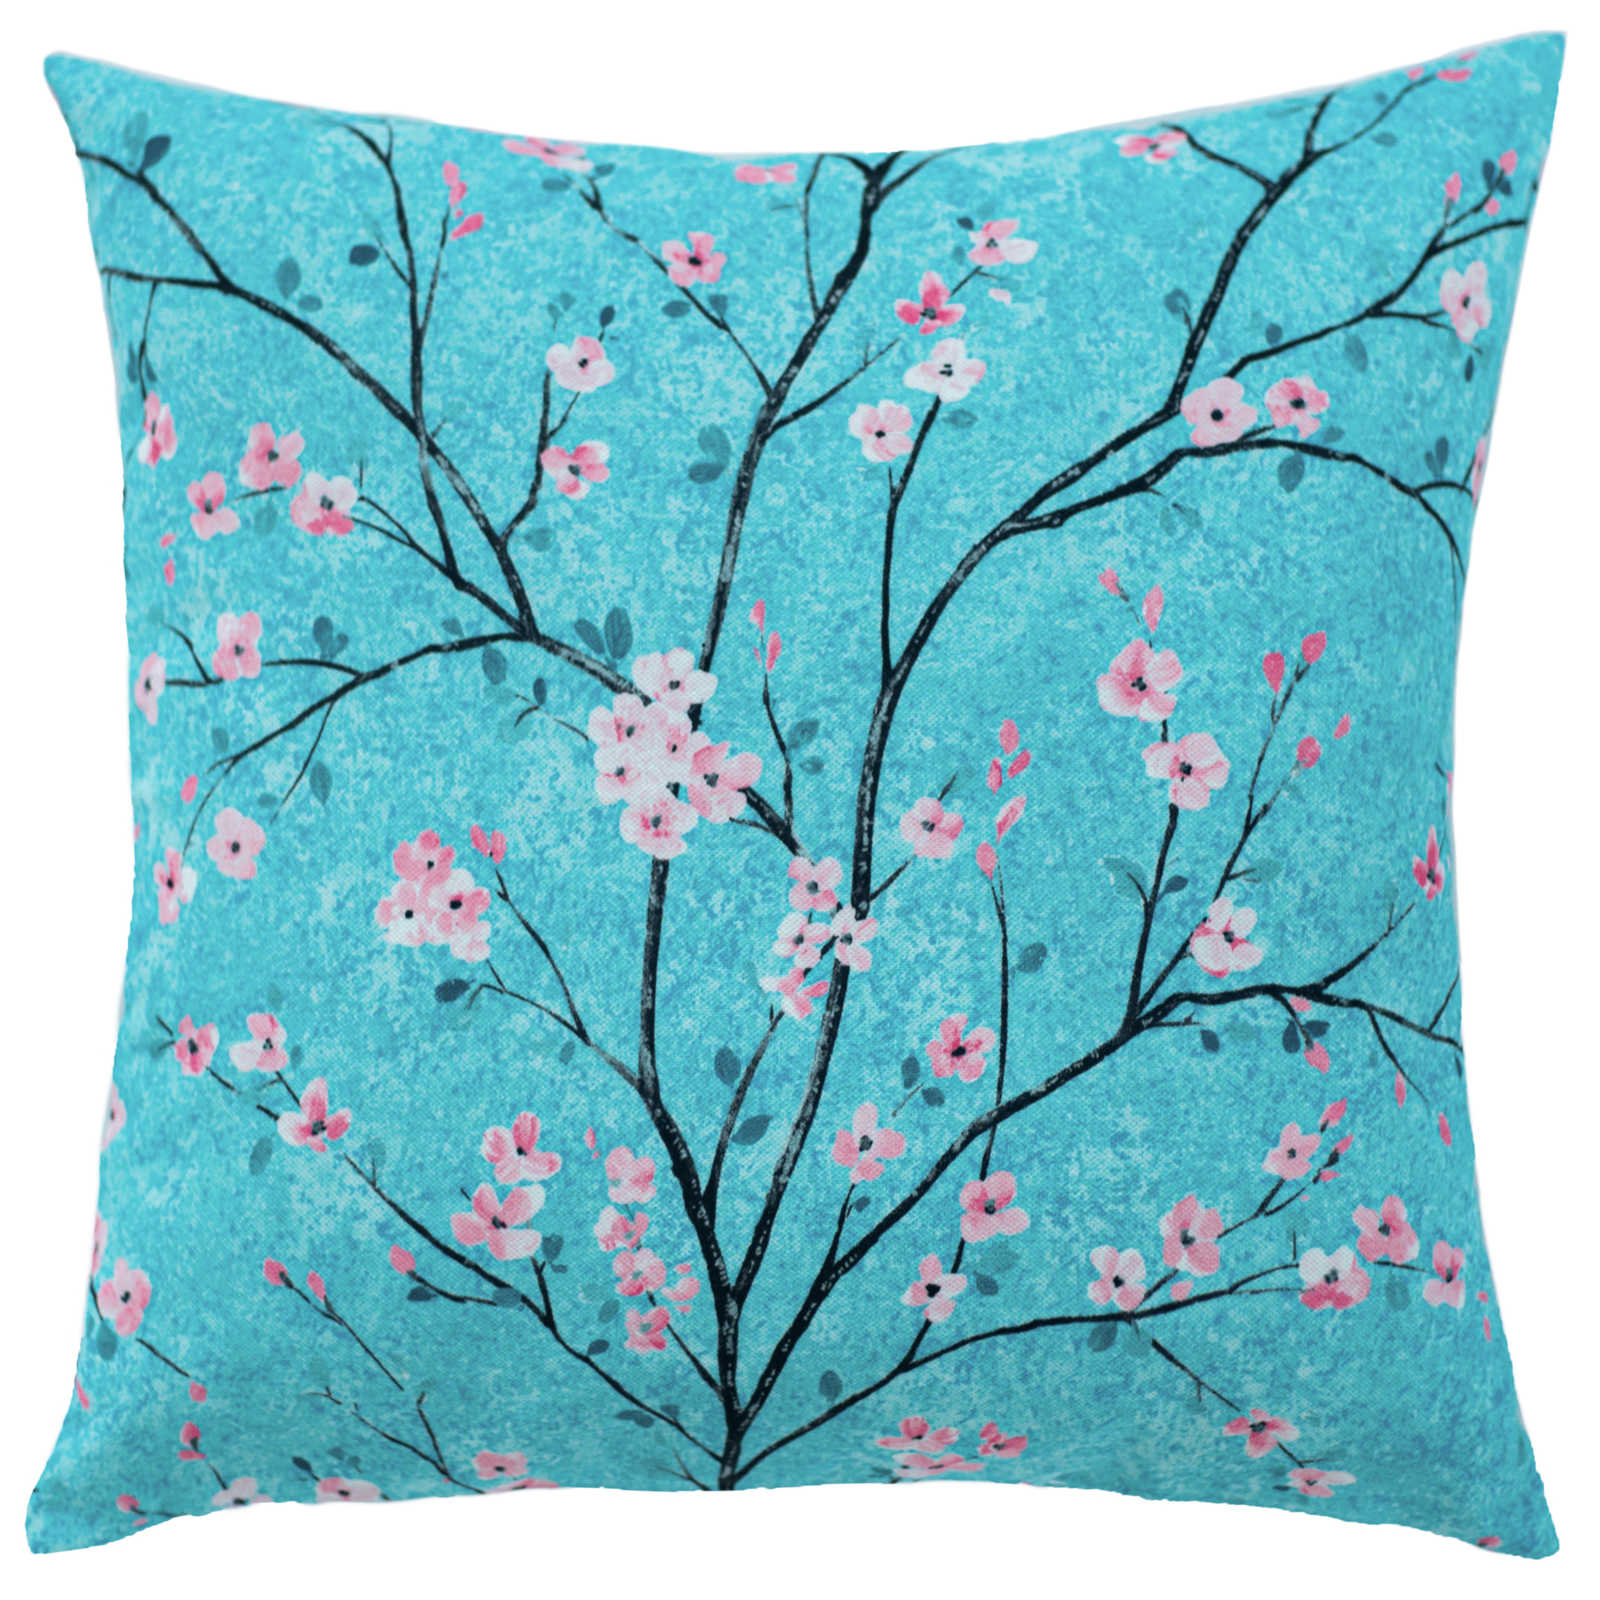         Cushion Cover Bleu "Cherry Blossom 2», 45x45cm
    